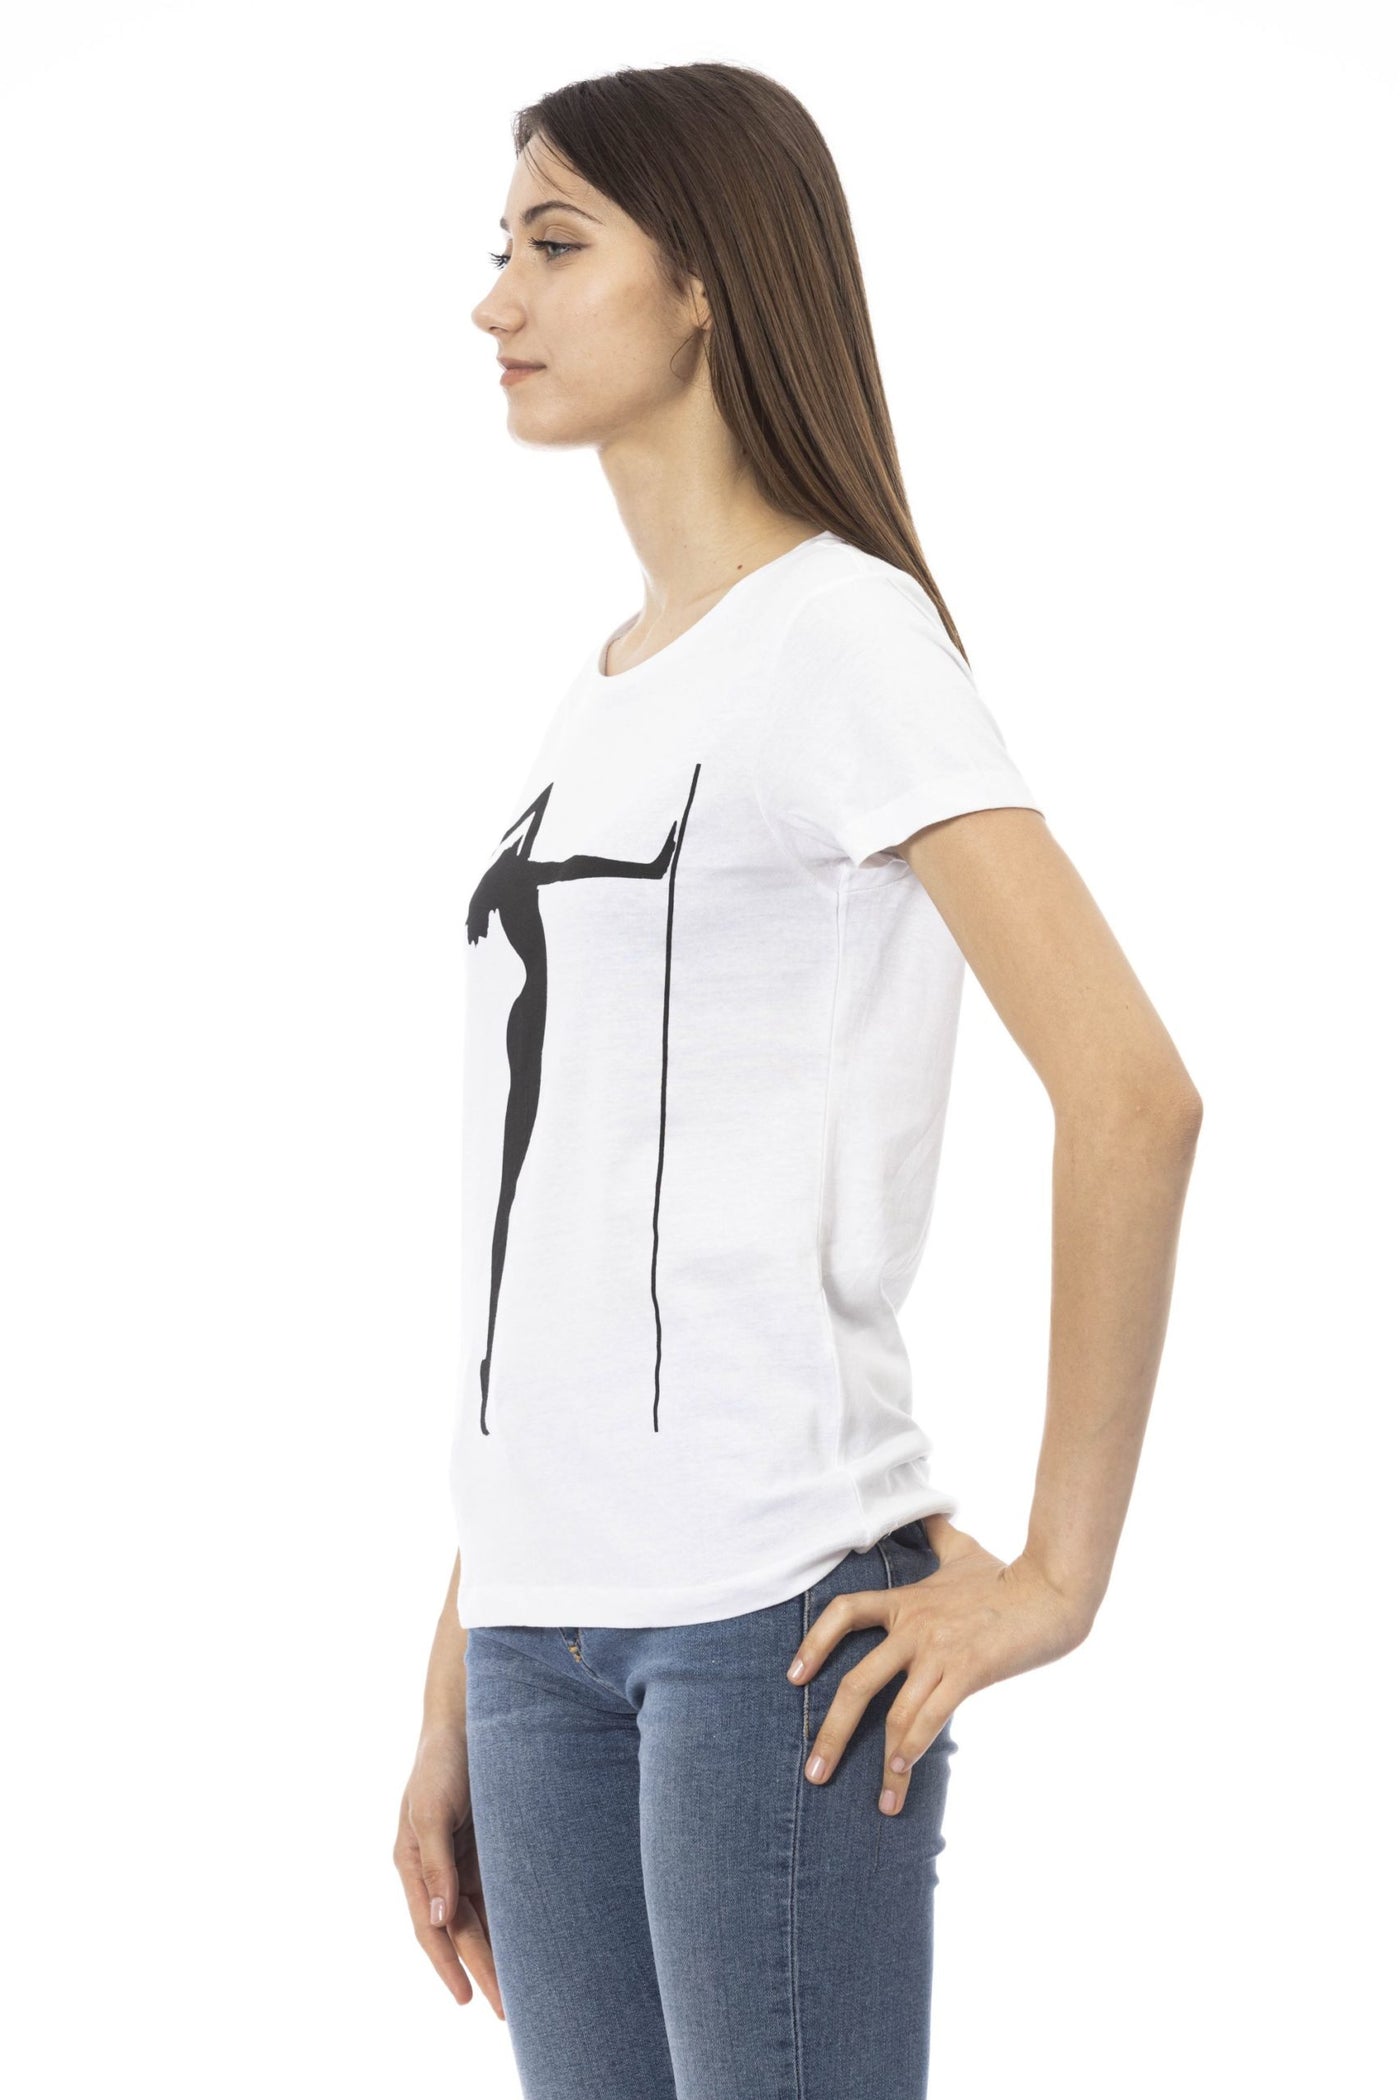 Trussardi Action White Cotton Tops & T-Shirt